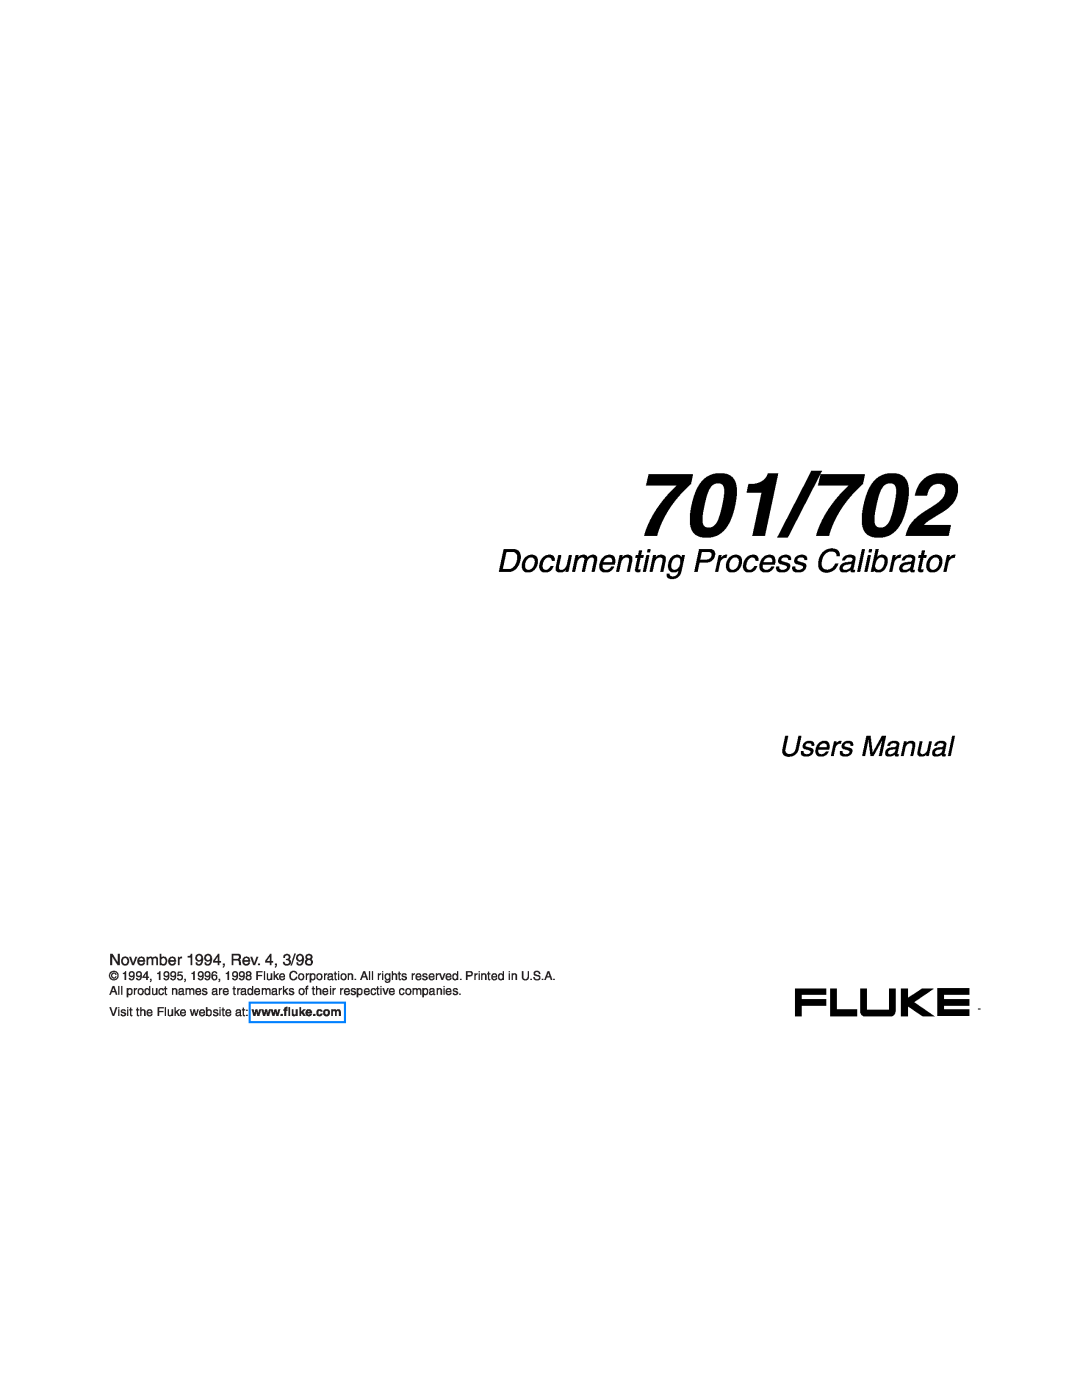 Fluke Rev. 4 user manual 701/702, Documenting Process Calibrator, Users Manual 